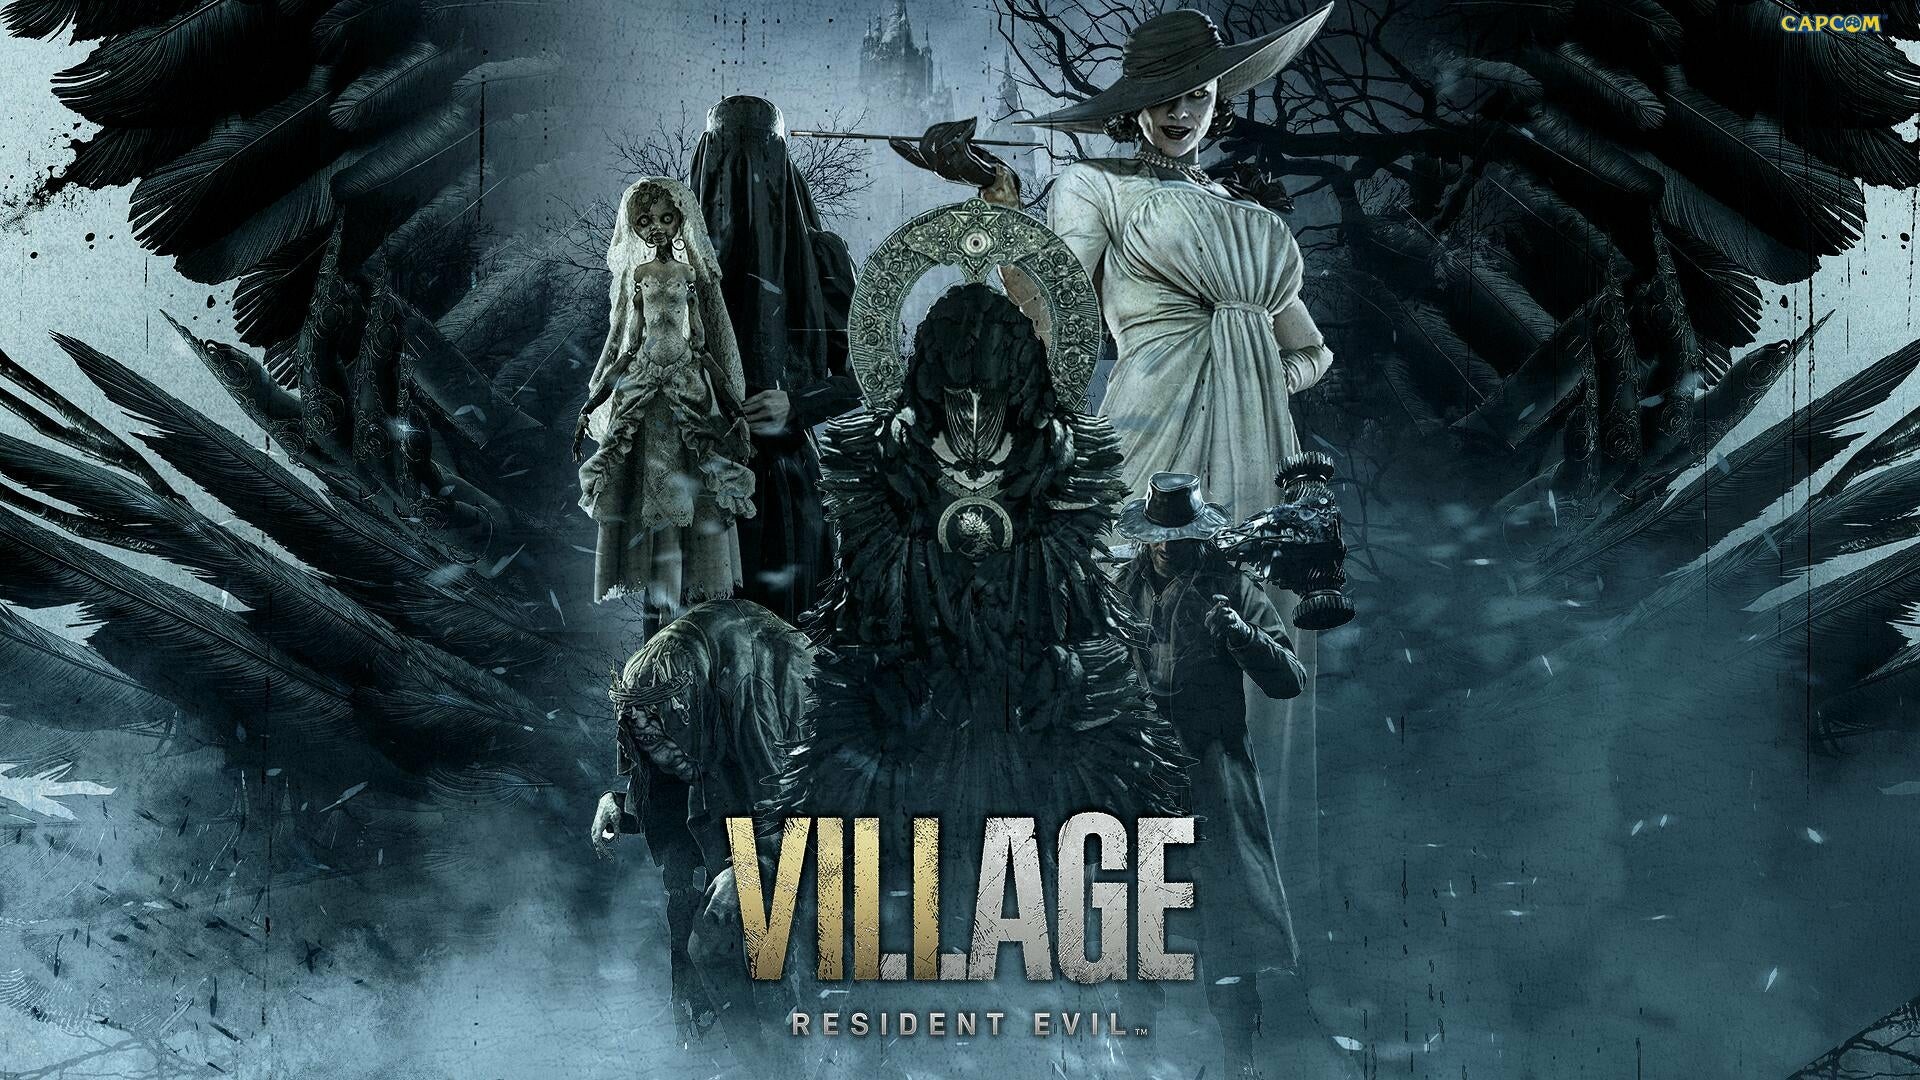 Resident Evil Village: The eighth major installment in the storied RE franchise. 1920x1080 Full HD Wallpaper.